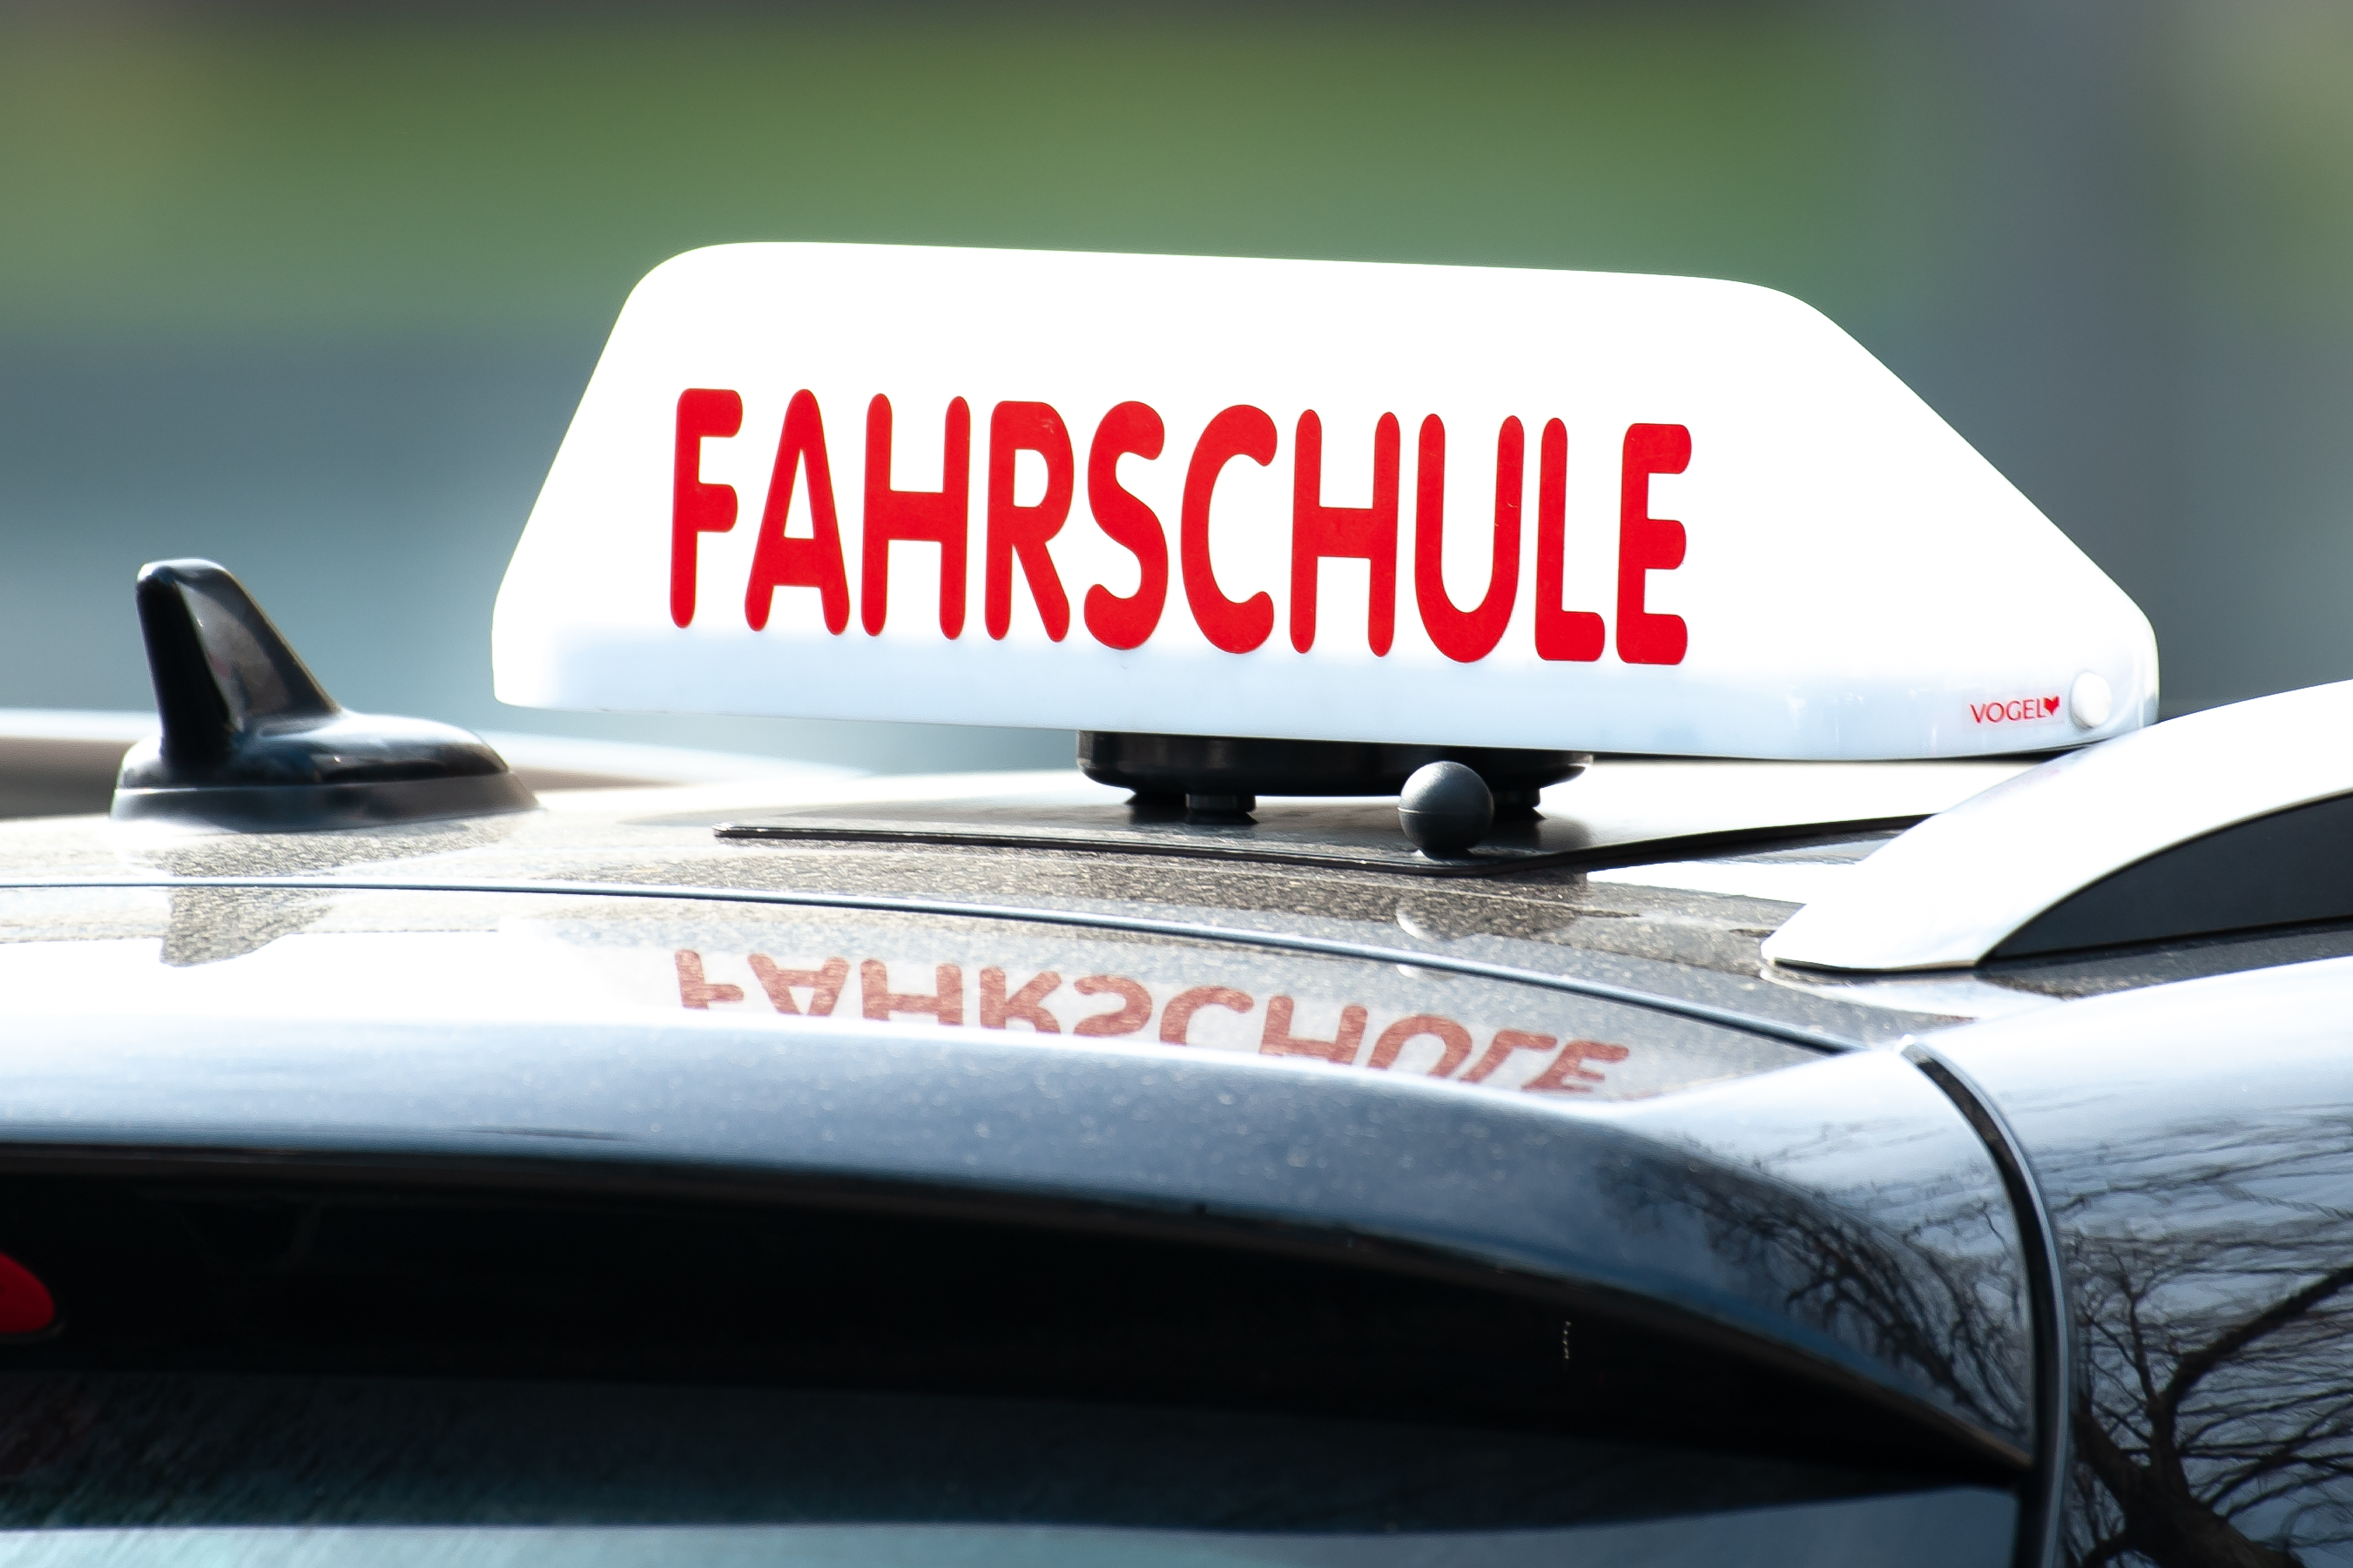 Infos zum Beruf Fahrlehrer - Fahrlehrerverband Baden-Württemberg